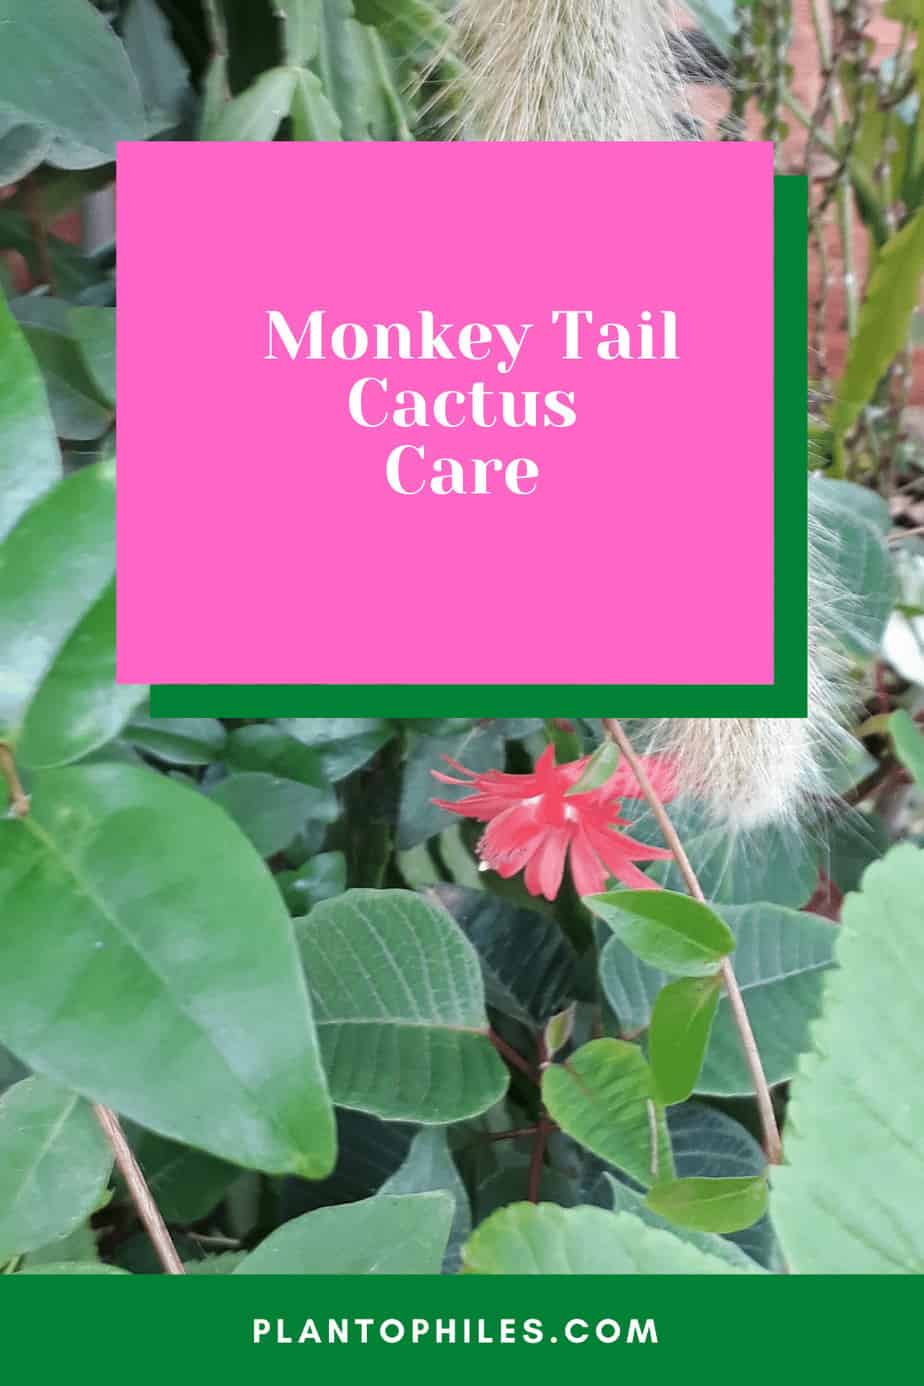 Monkey Tail cactus care